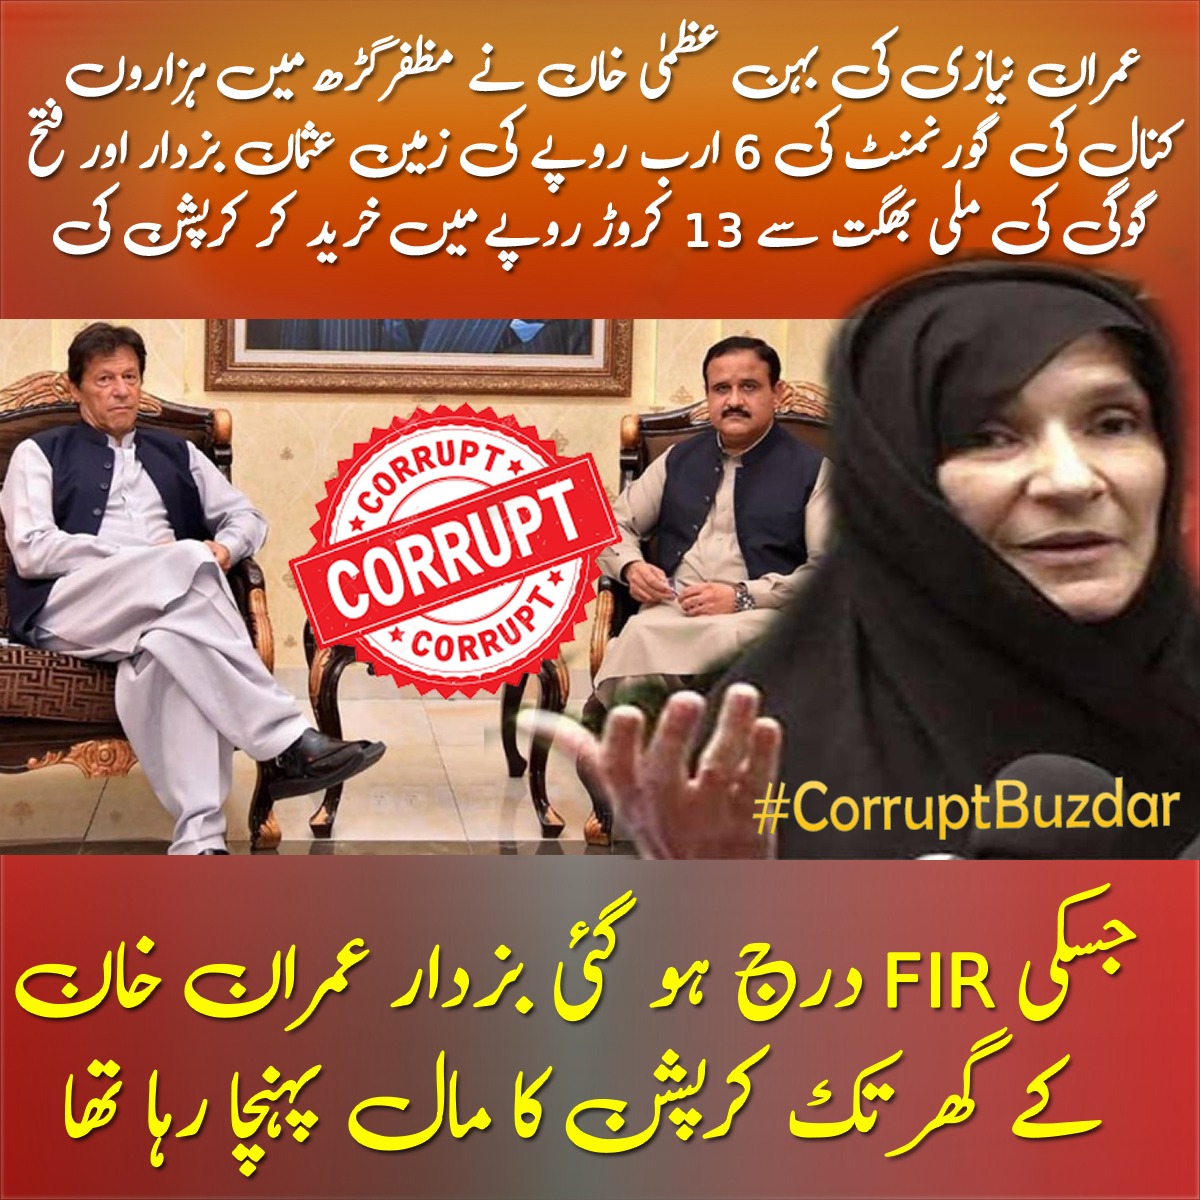 #CorruptBuzdar is a corrupt person.